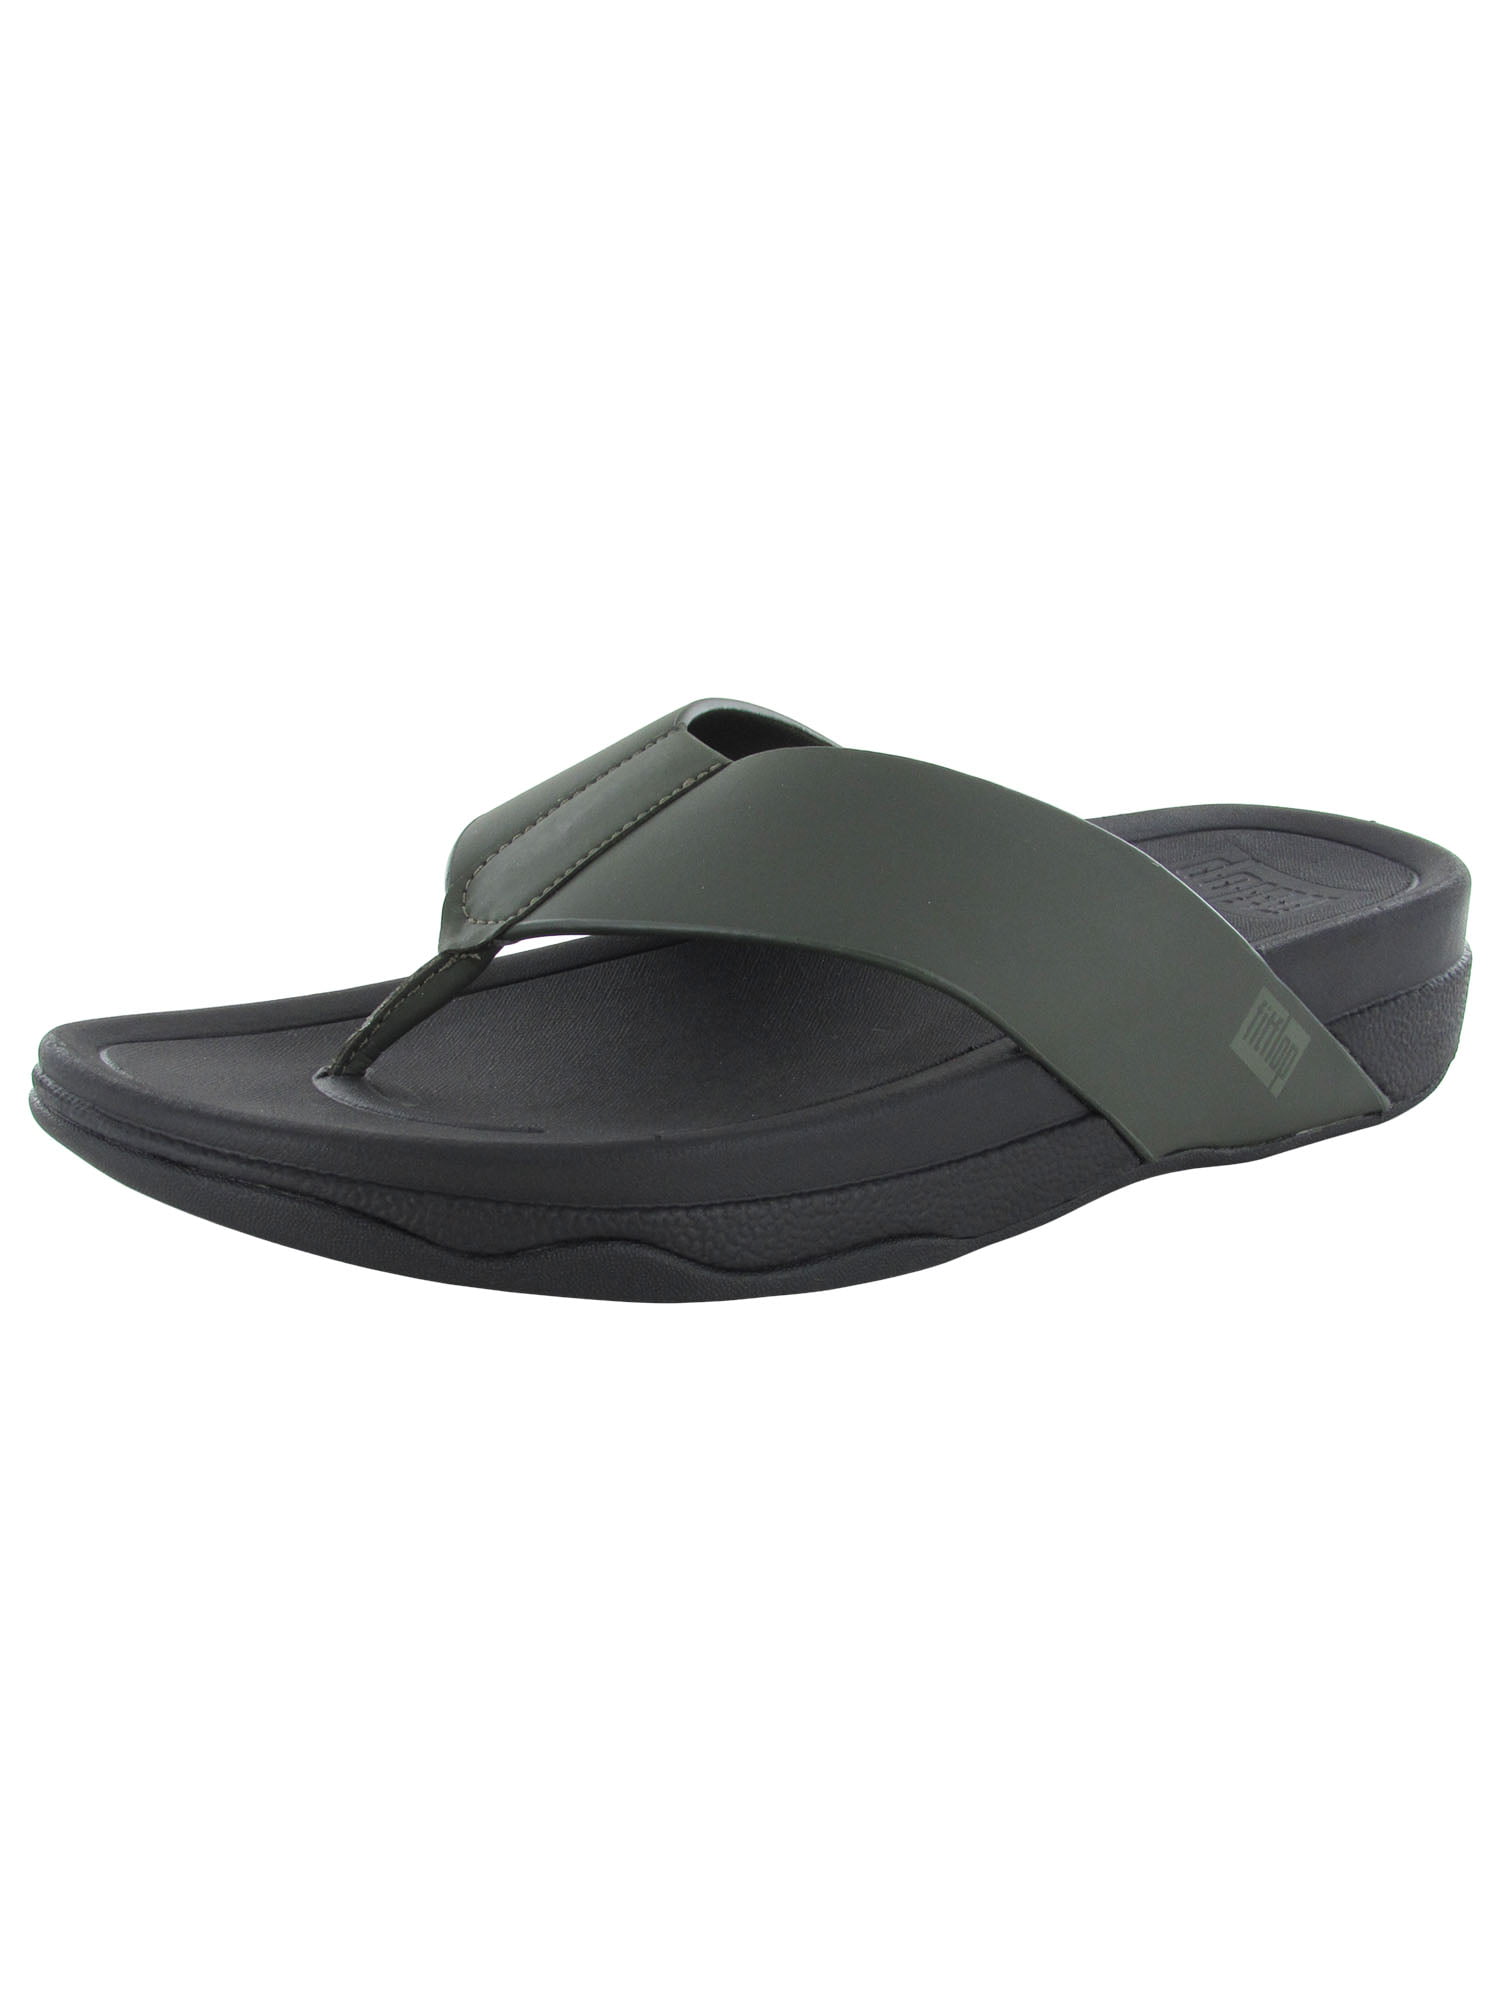 Mens Flip Flops Surf EVA Toe Post Flat Beach Sandals Comfortable Footwear UK7-11 